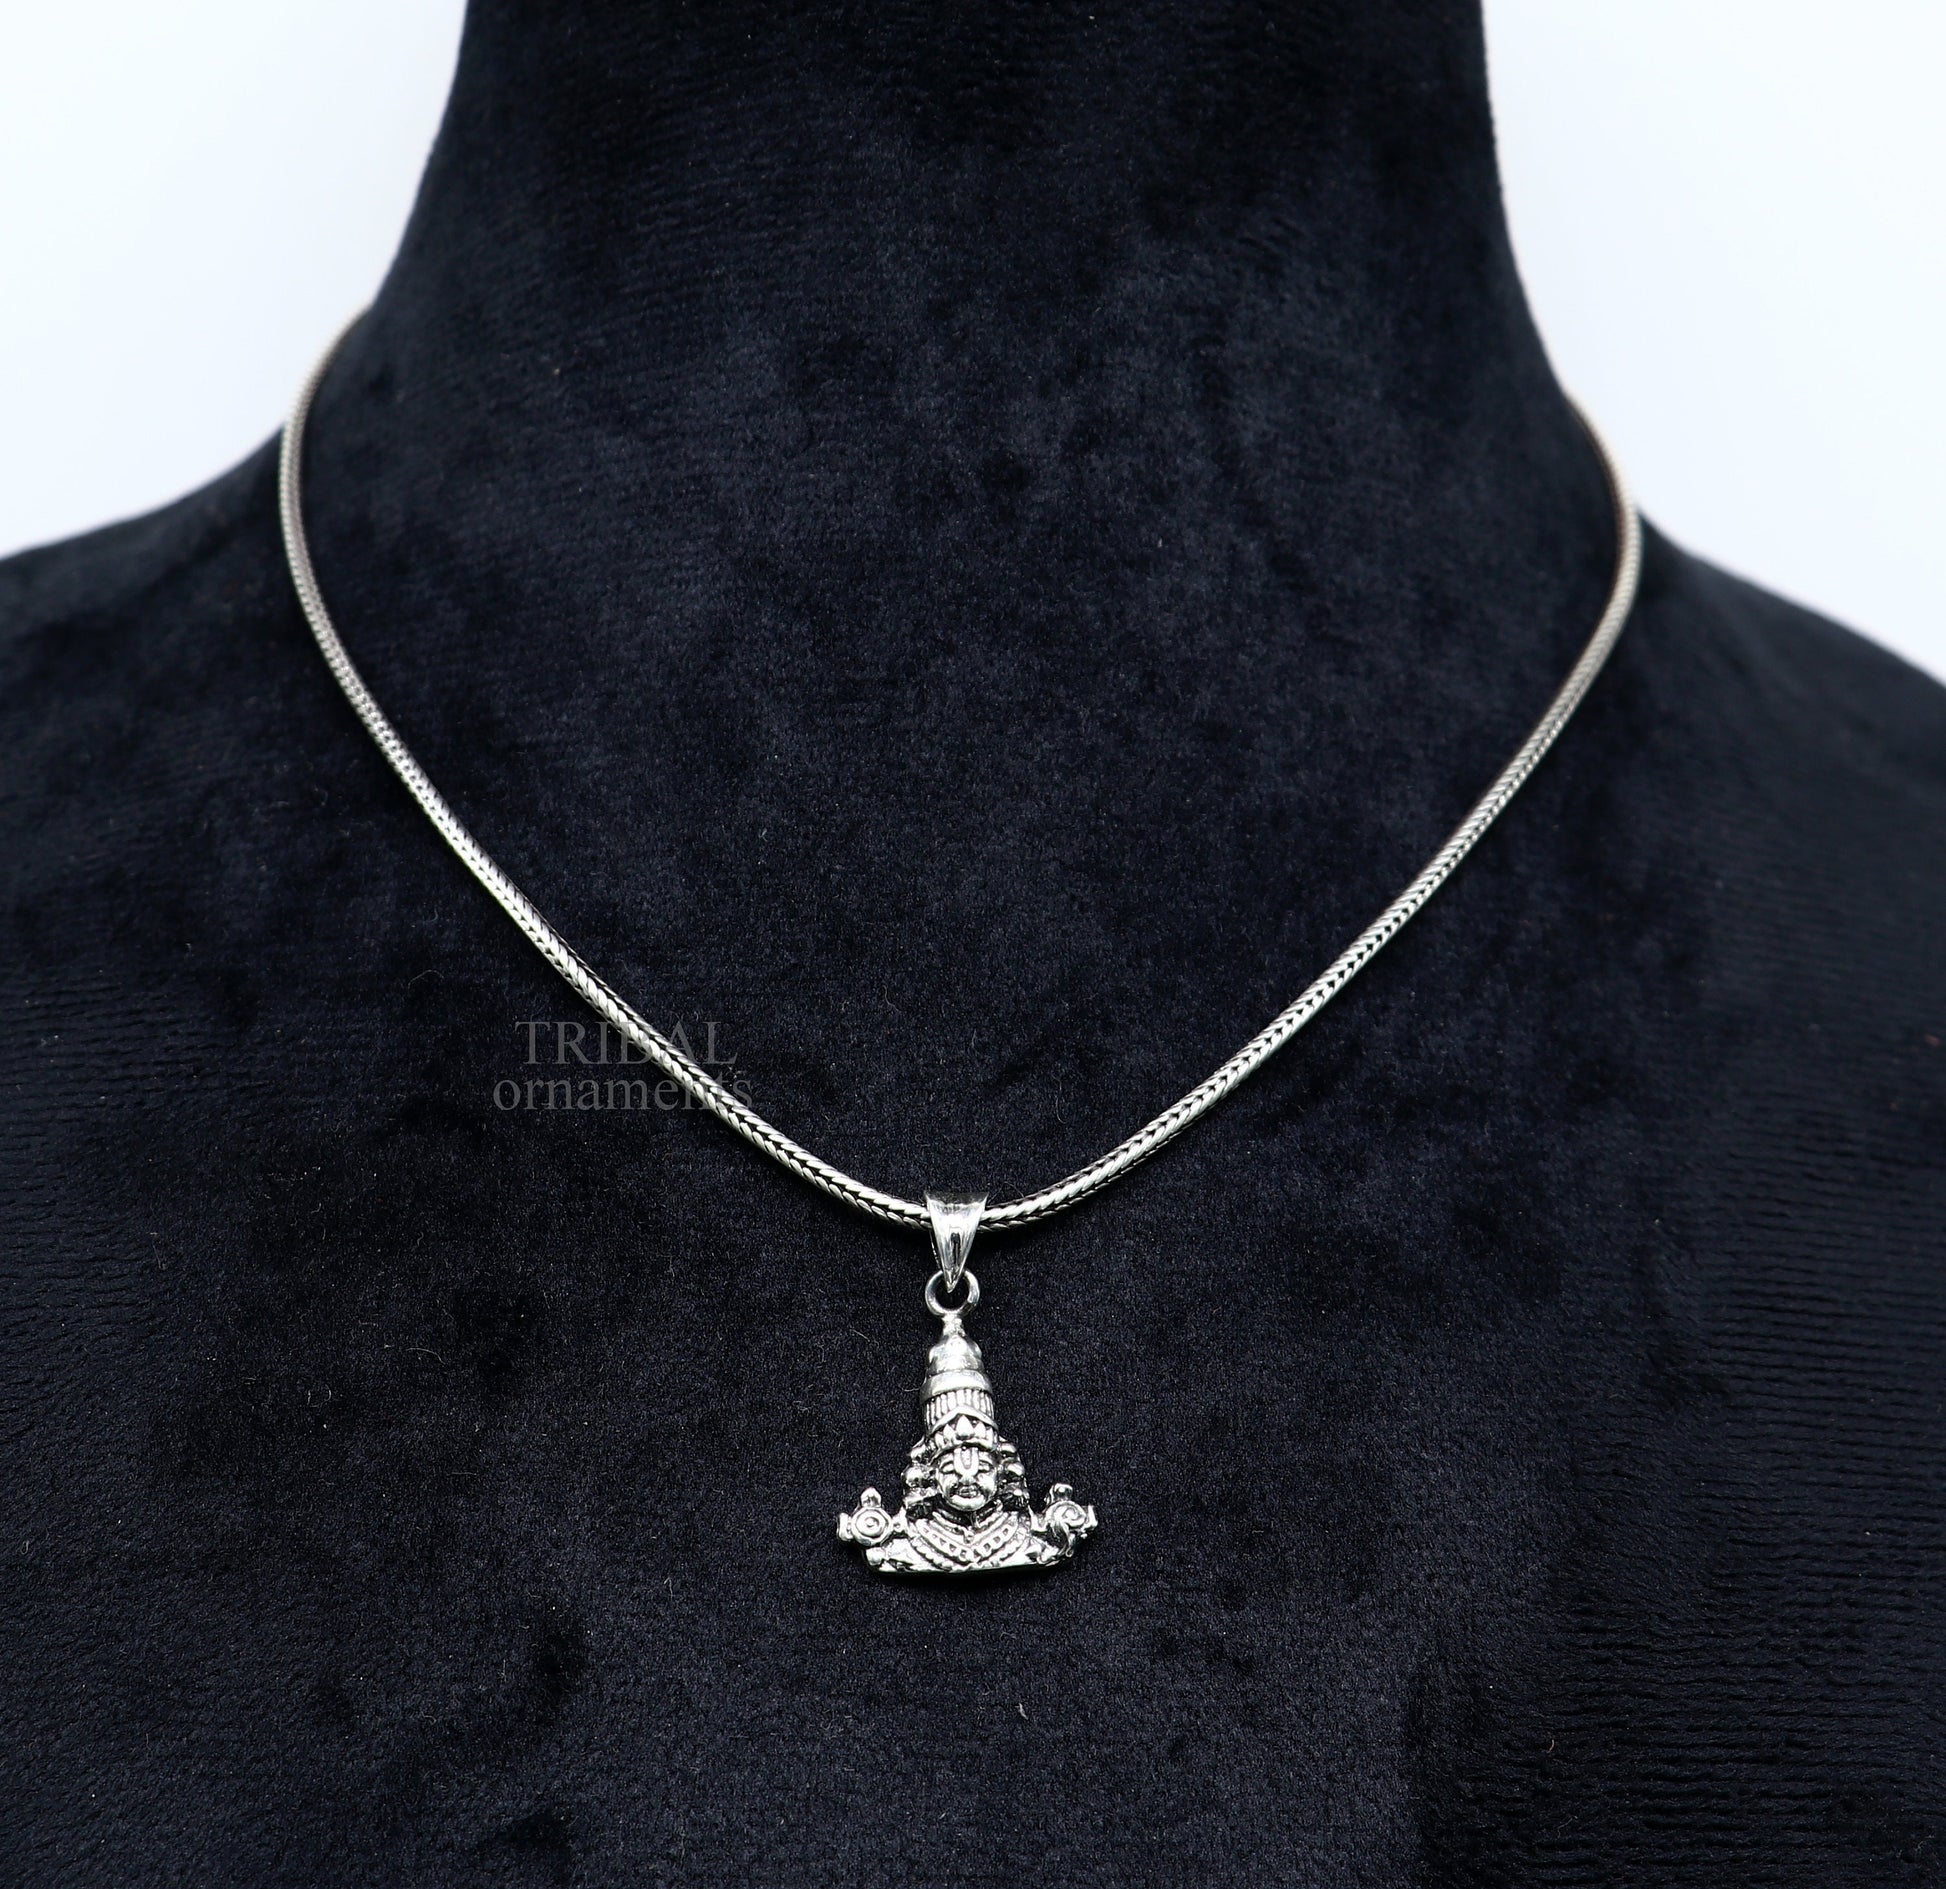 925 sterling silver vintage stylish Hindu idol tirupati balaji and Laxmi Pendant, amazing design Krishna pendant gifting jewelry ssp1597 - TRIBAL ORNAMENTS